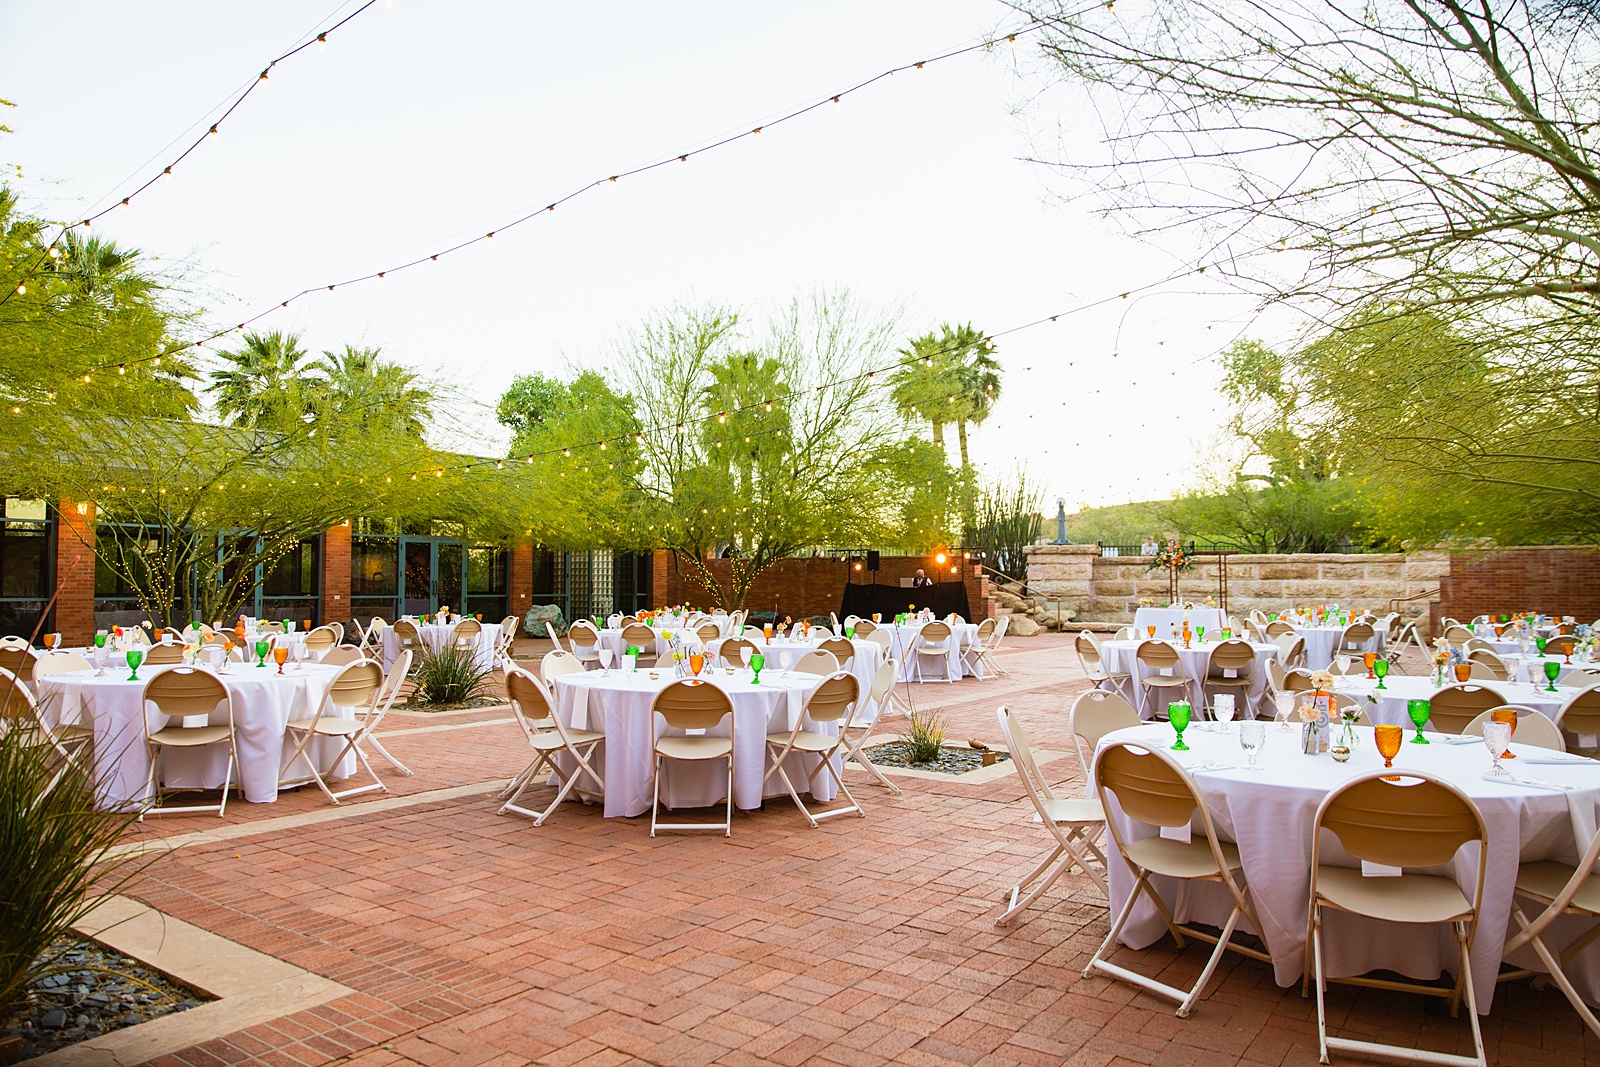 Wedding reception at Arizona Historical Society by Phoenix wedding photographer PMA Photography.